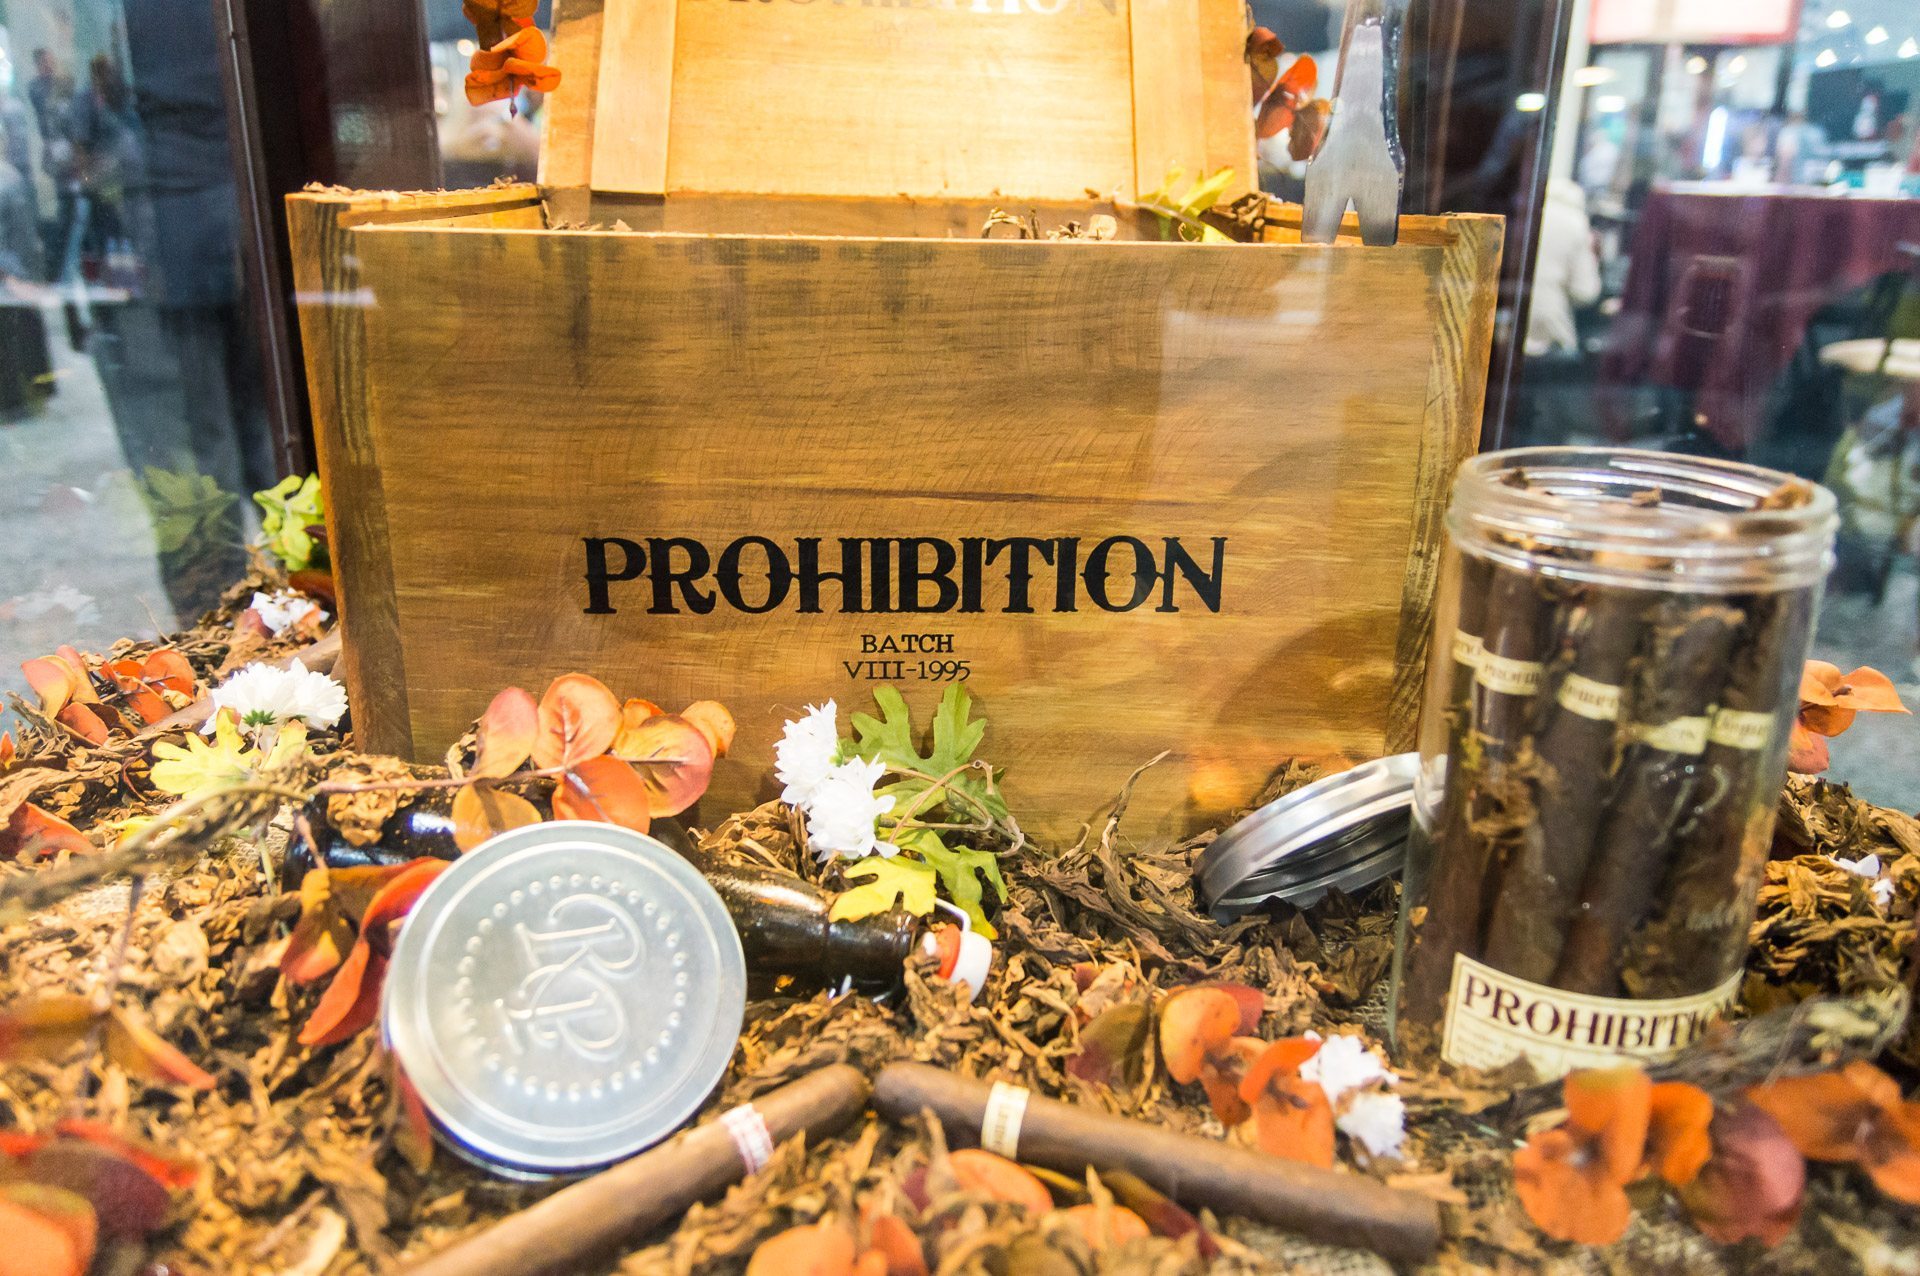 Prohibition display